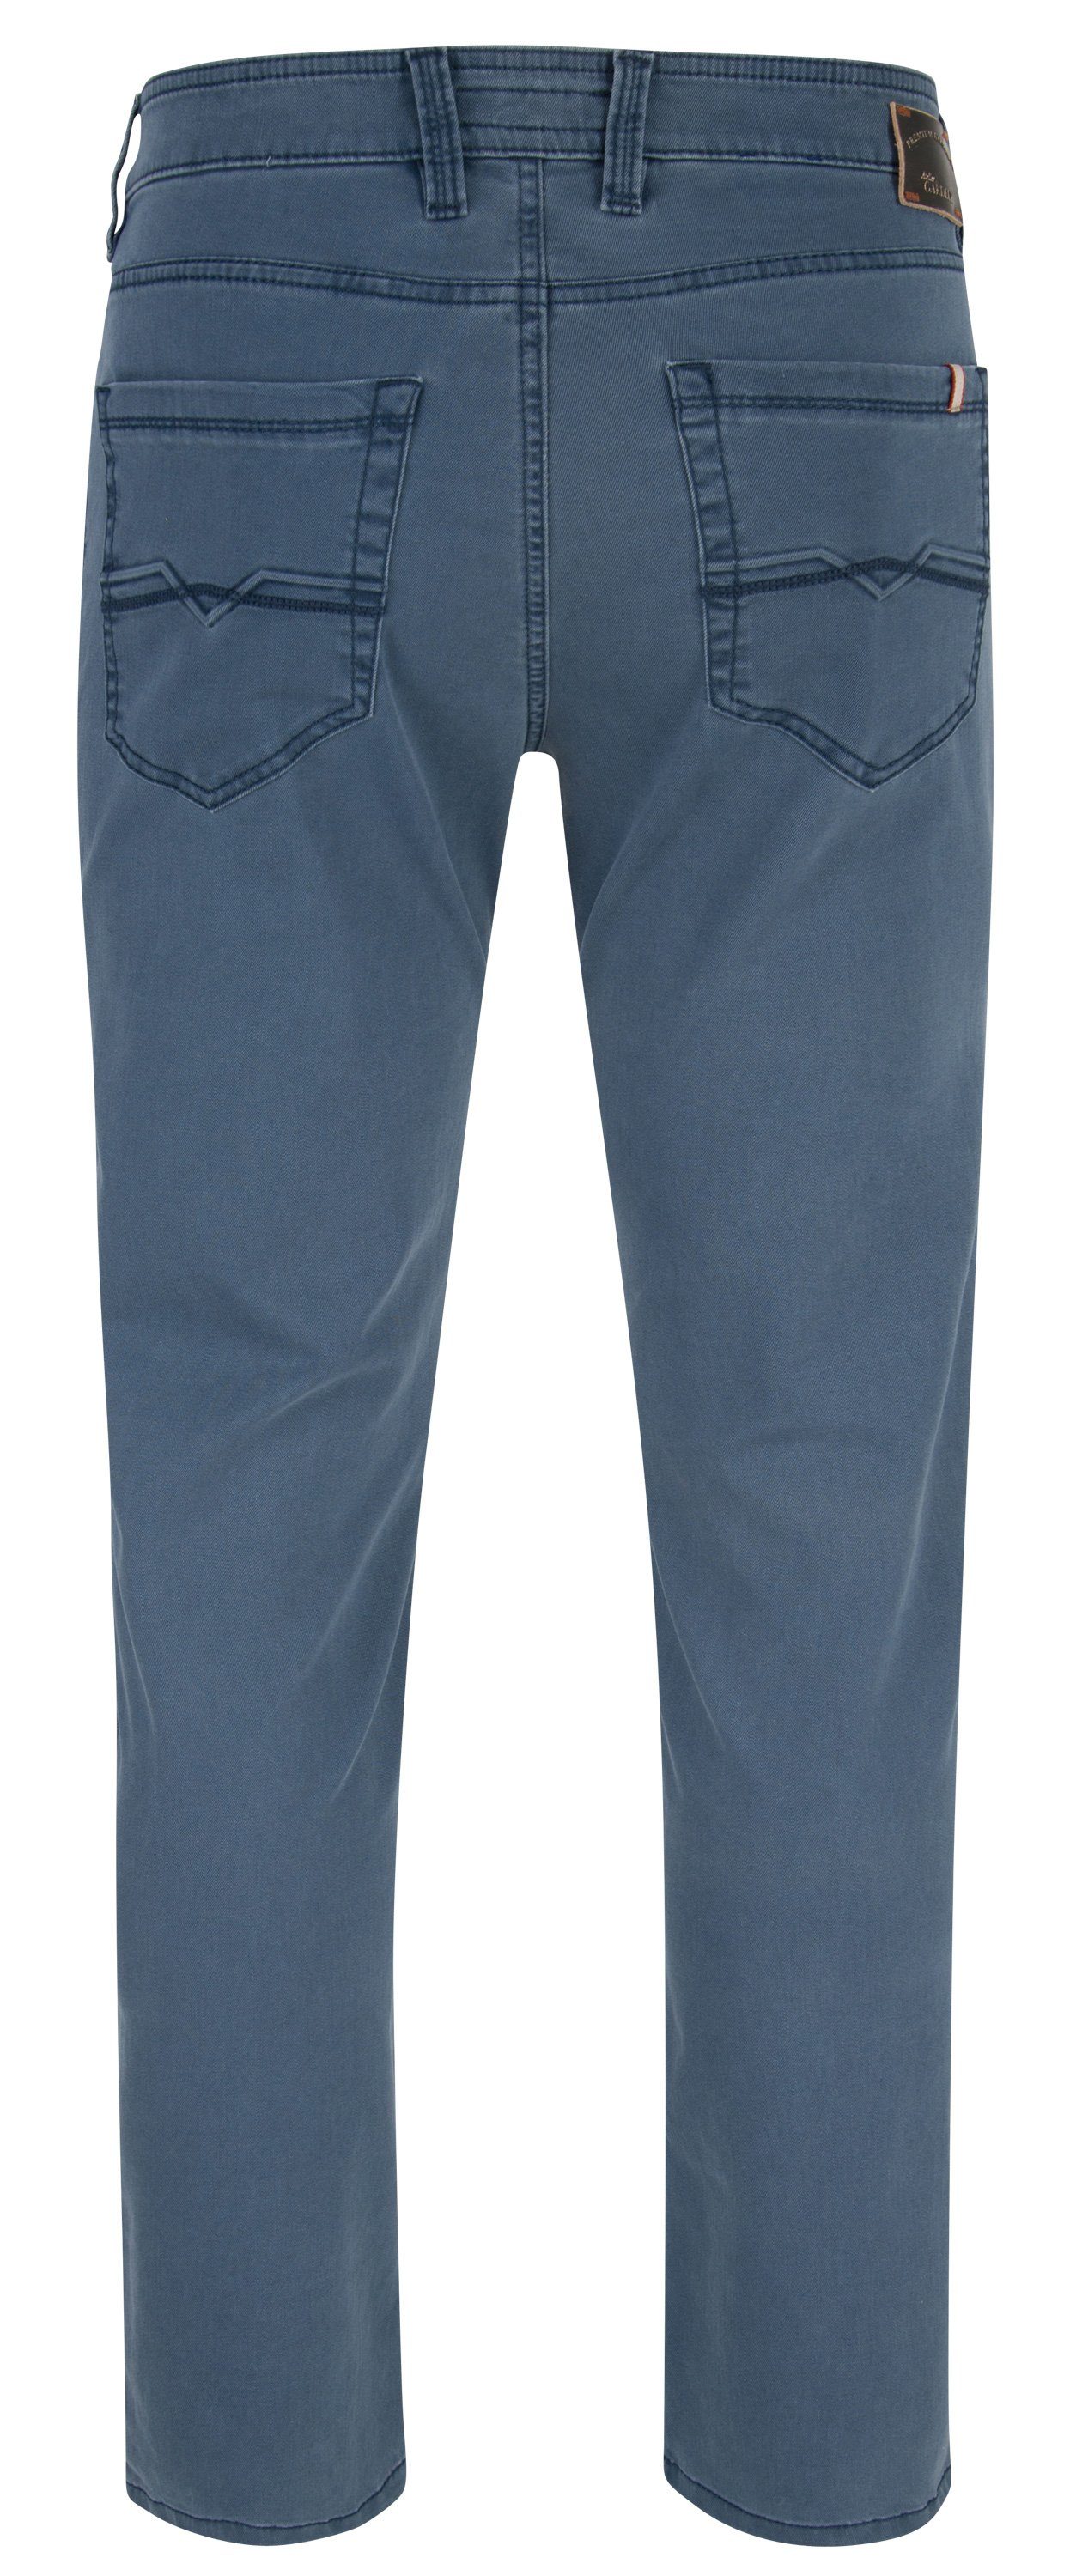 Herren Jeans Atelier GARDEUR 5-Pocket-Jeans ATELIER GARDEUR BATU dove blue 2-0-411121-66